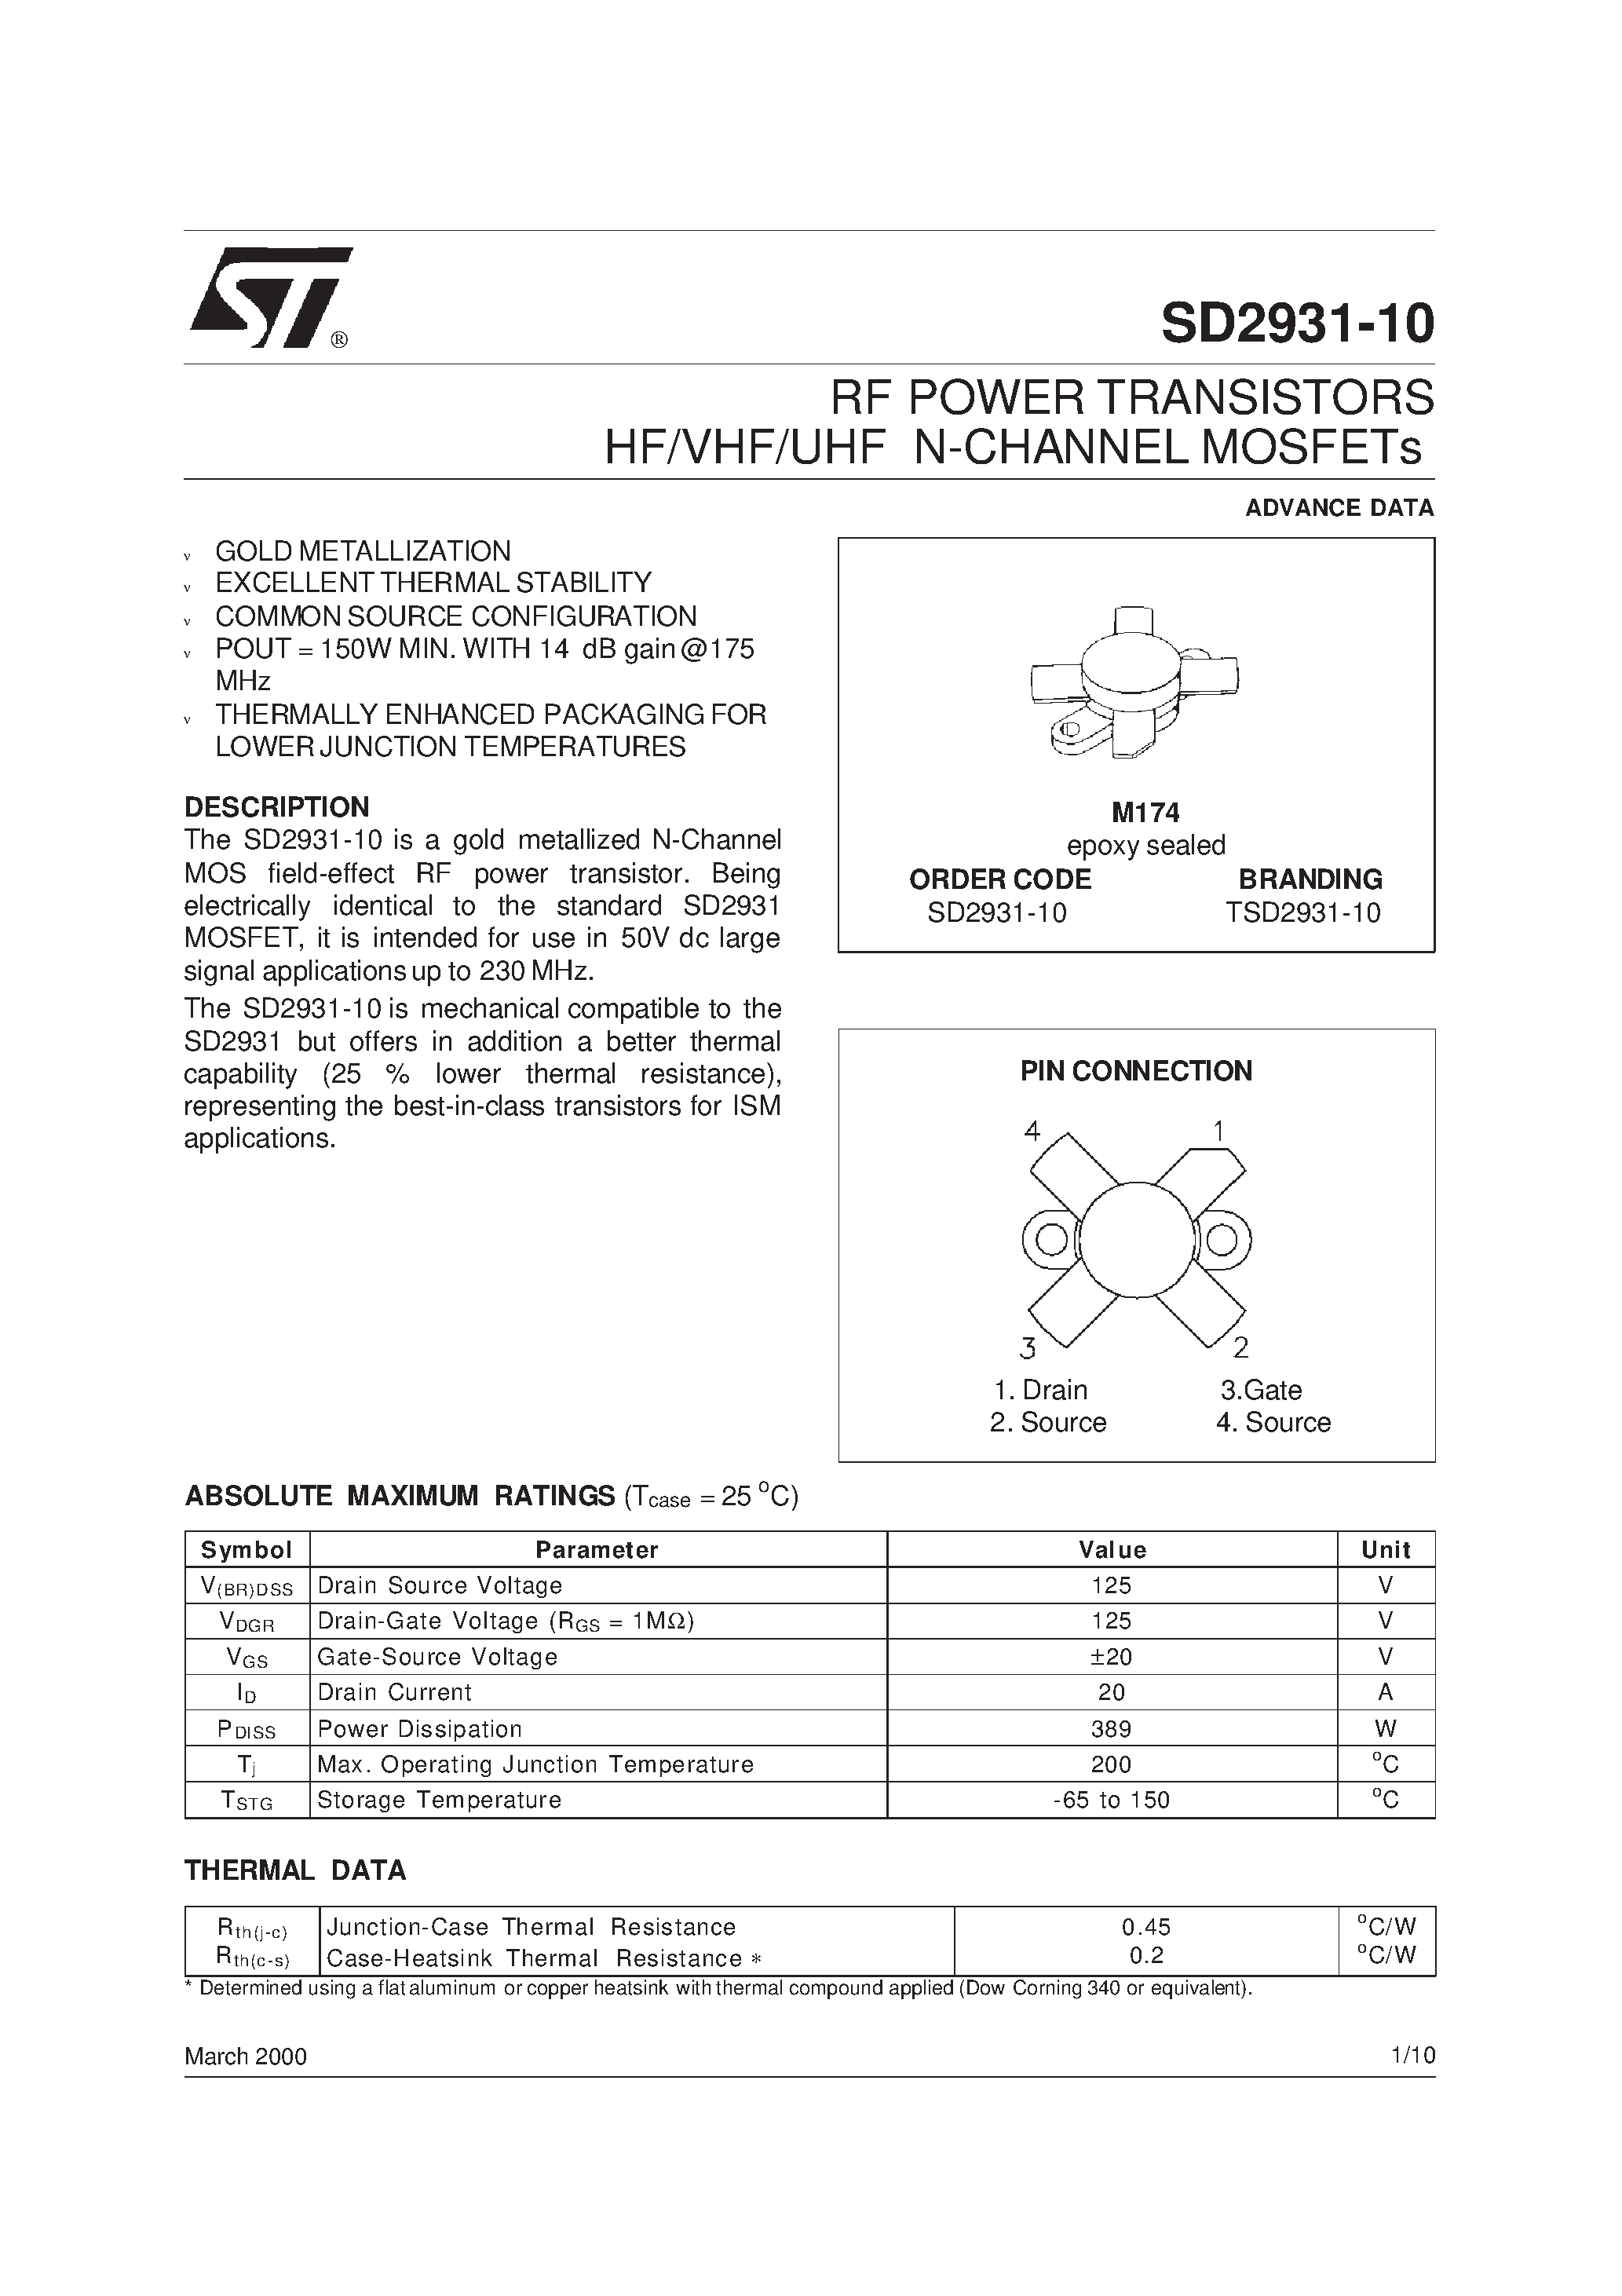 Datasheet SD2931-10 - RF POWER TRANSISTORS HF/VHF/UHF N-CHANNEL MOSFETs page 1